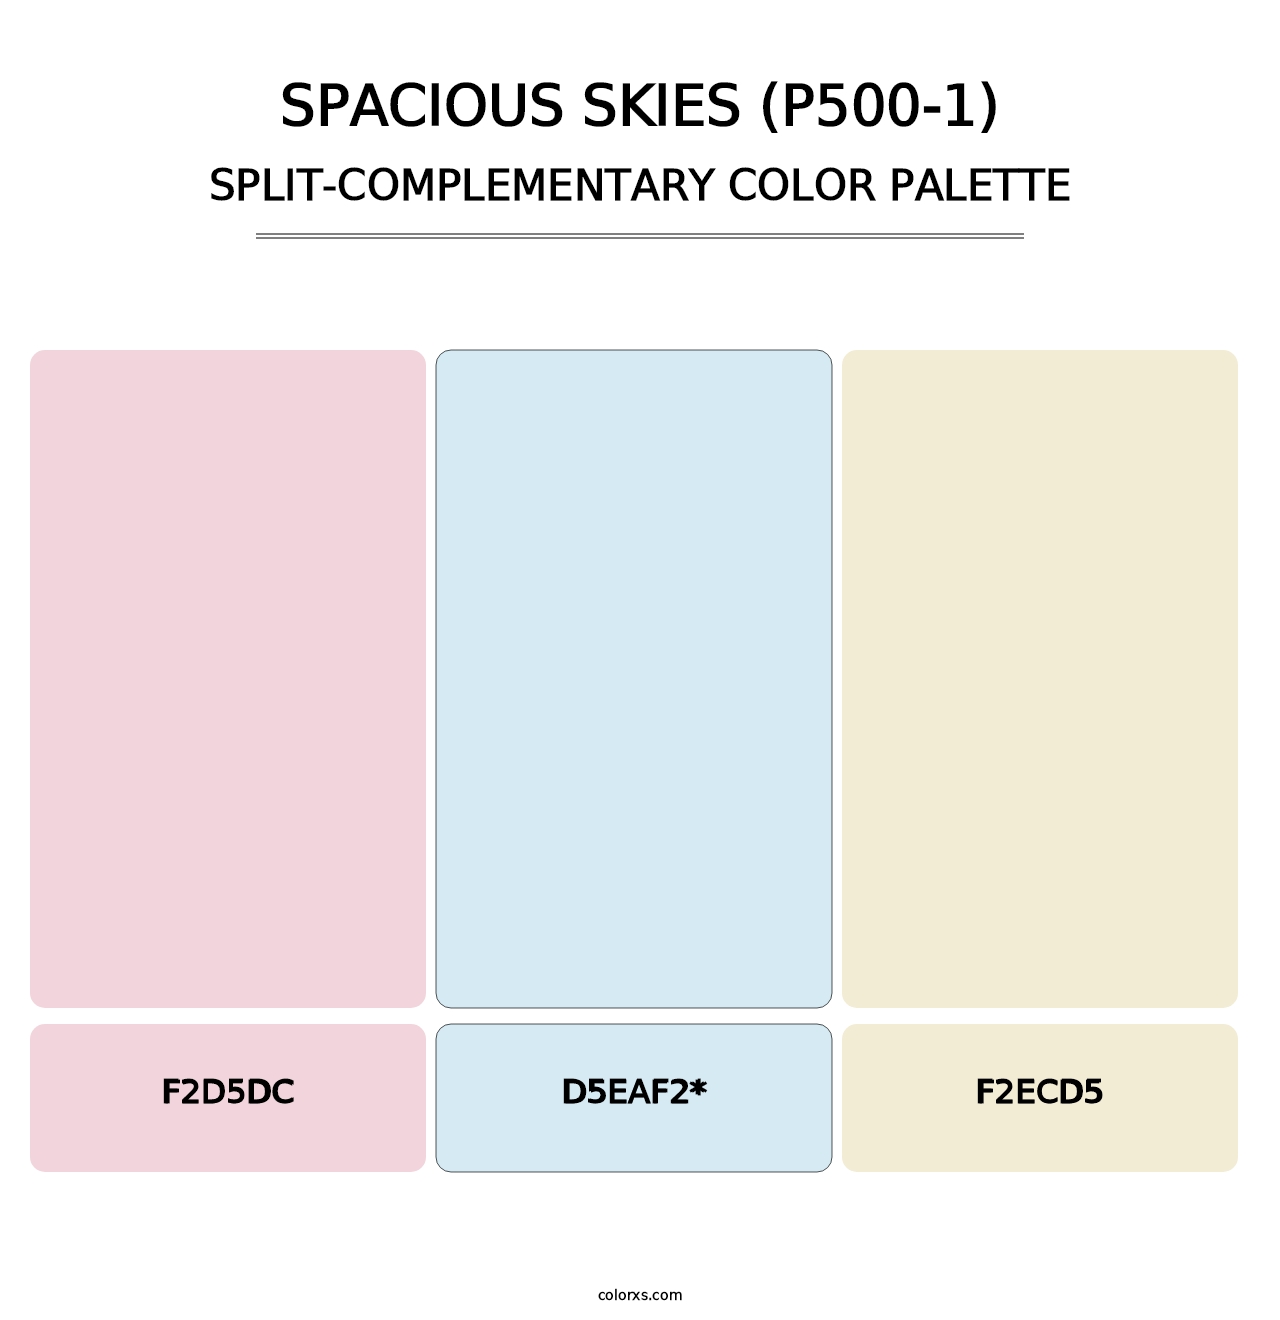 Spacious Skies (P500-1) - Split-Complementary Color Palette